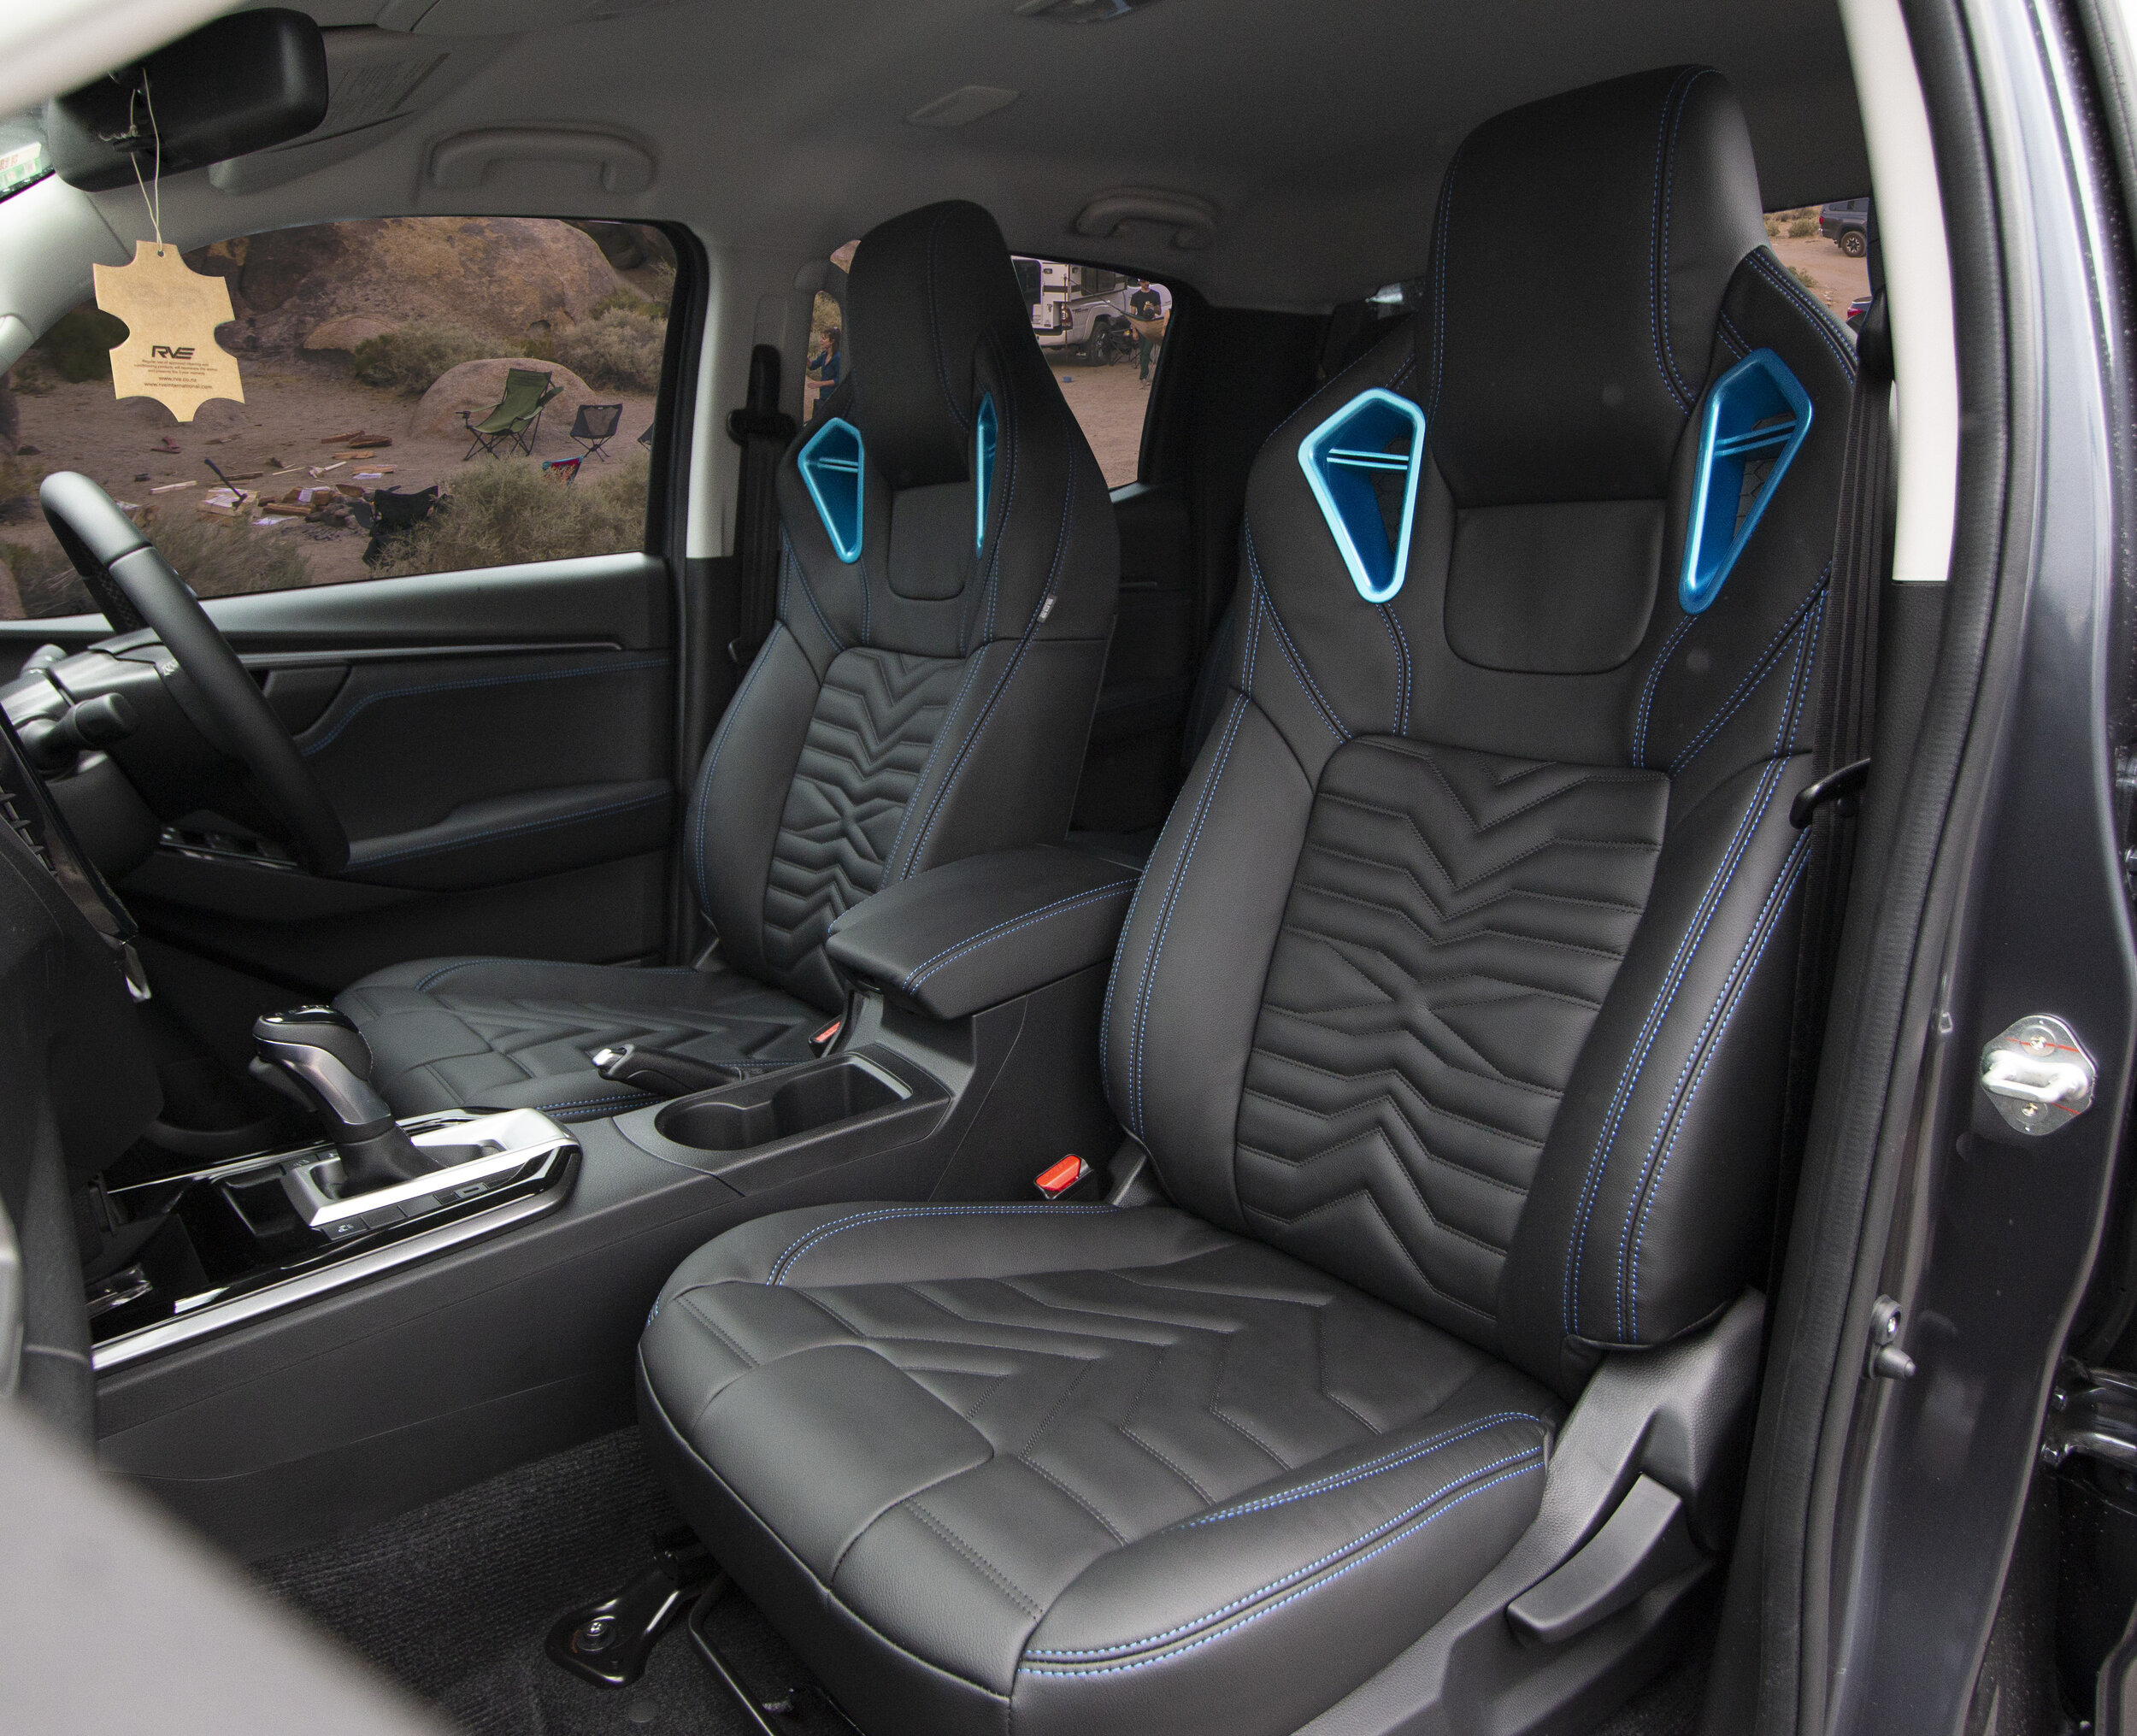 RVE Isuzu blue leather interior seats front.jpg